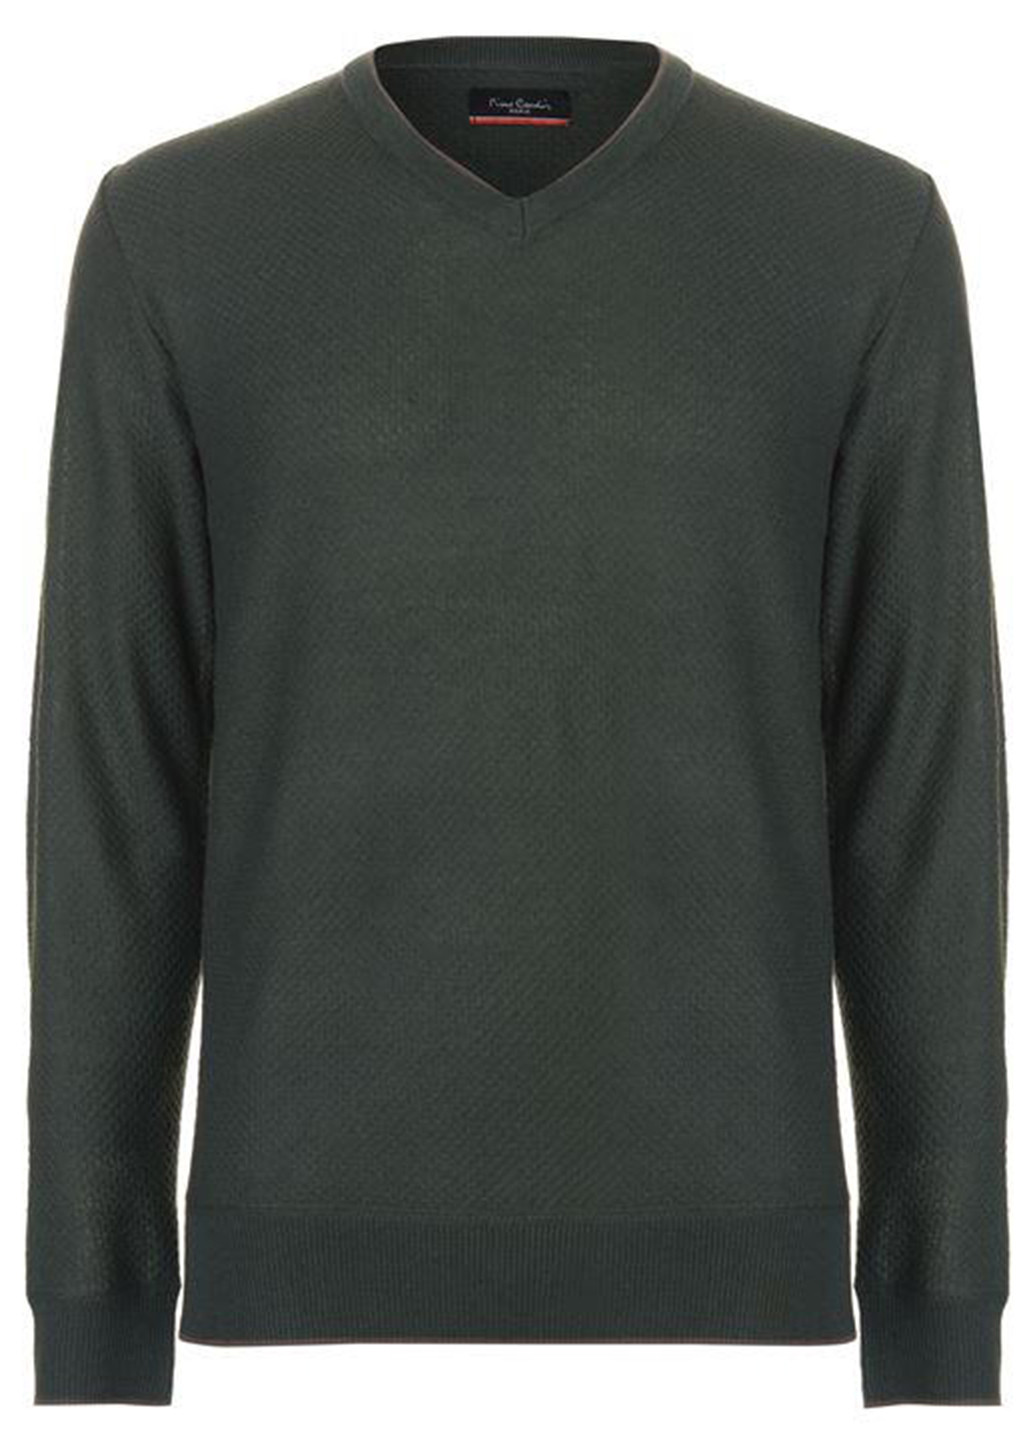 Темно-серый демисезонный пуловер пуловер Pierre Cardin